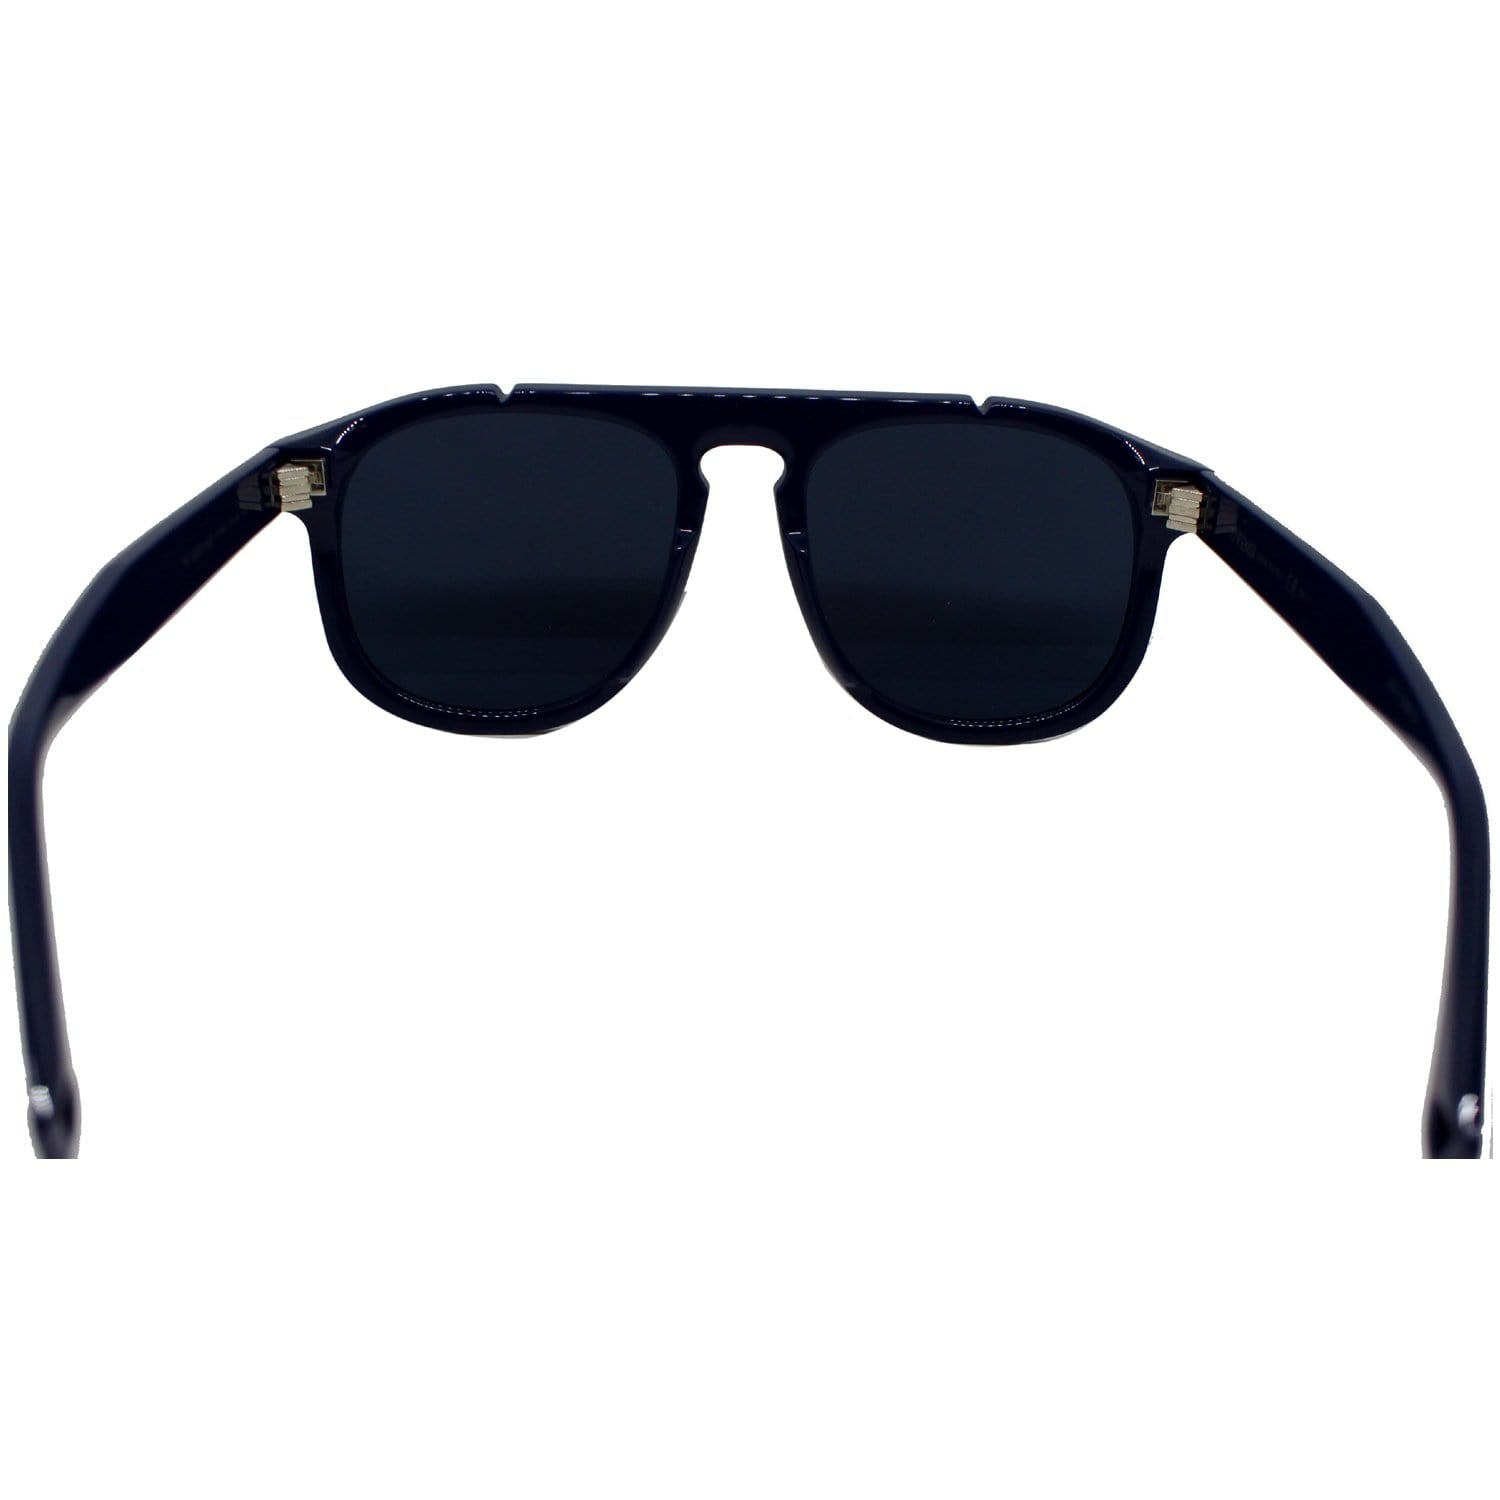 Fendi Sunglasses - 54/17/145